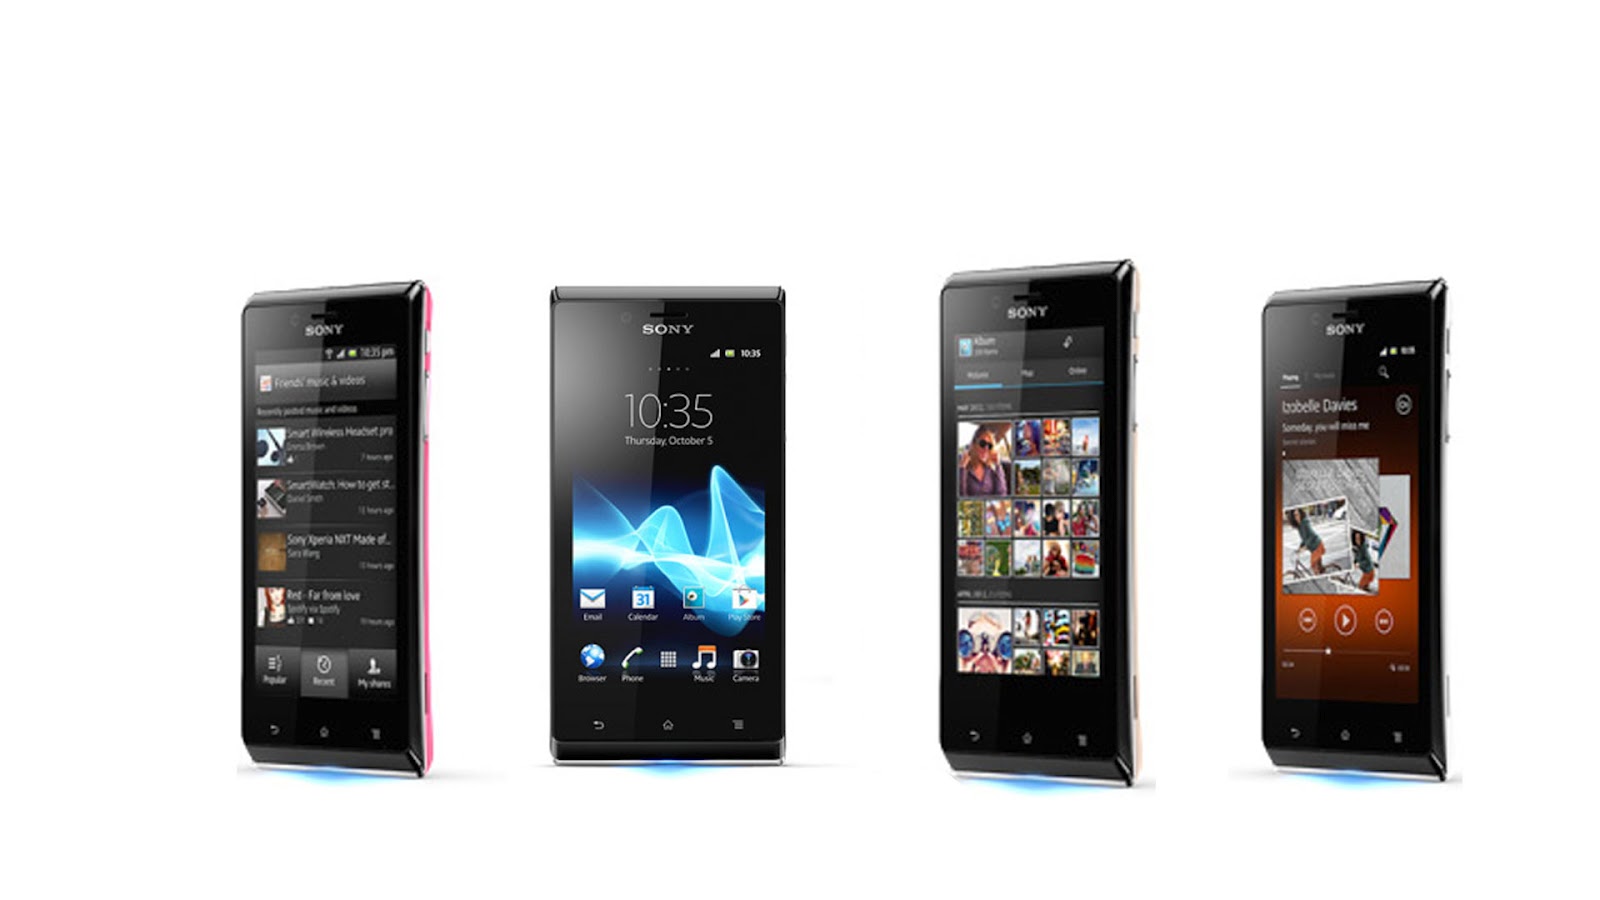 Sony+Xperia+J+Anroid+4G+Smartphone